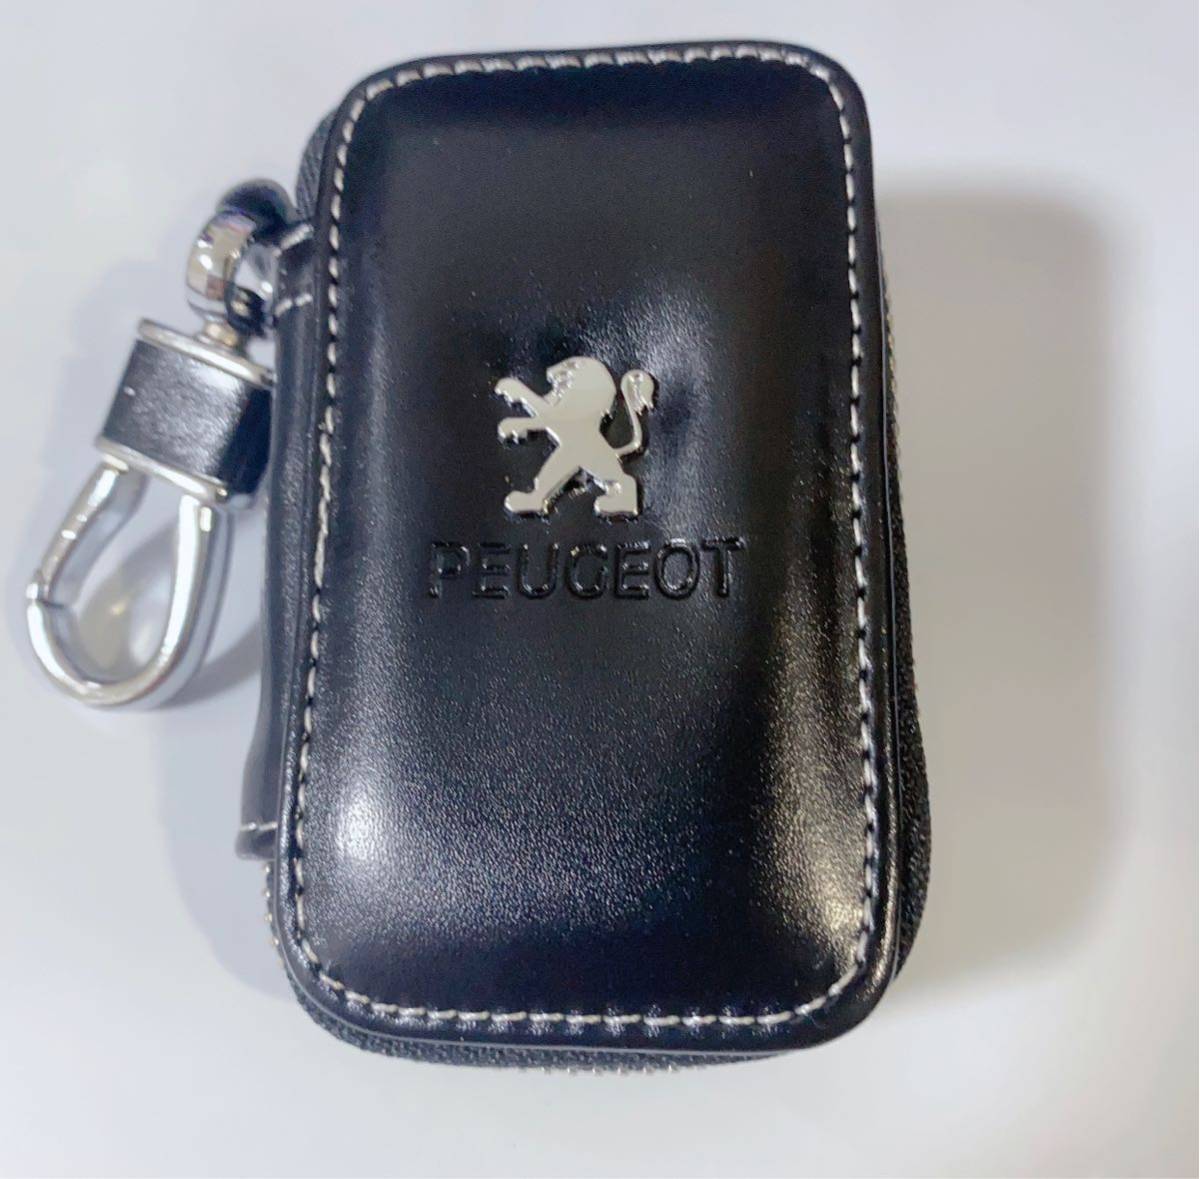  Peugeot key case feeling of luxury car key case key cover Peugeot car 